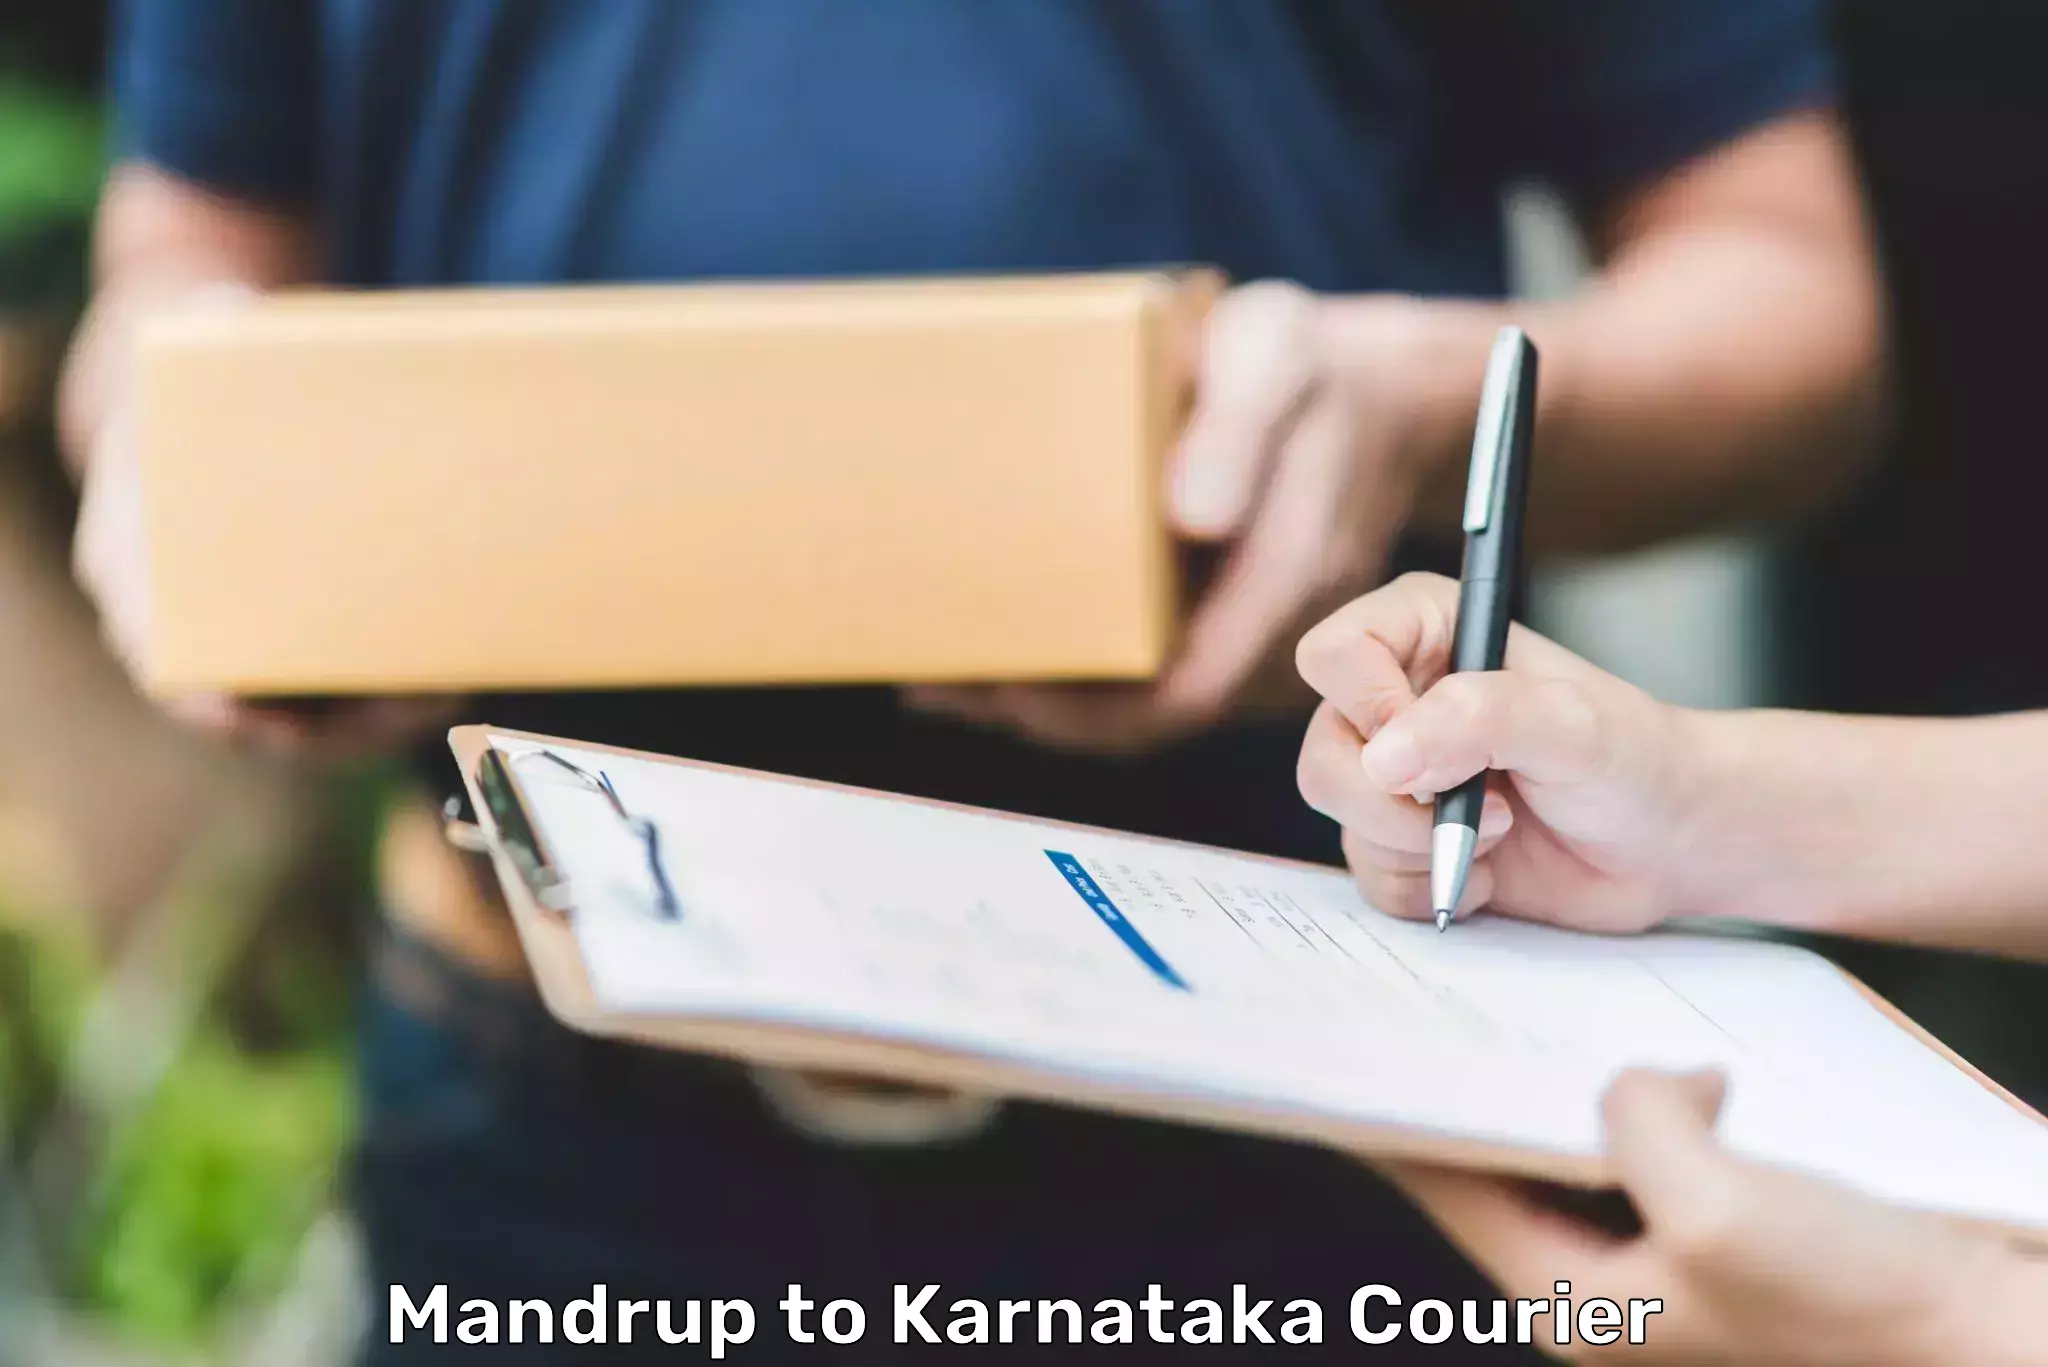 Doorstep delivery service Mandrup to Karnataka